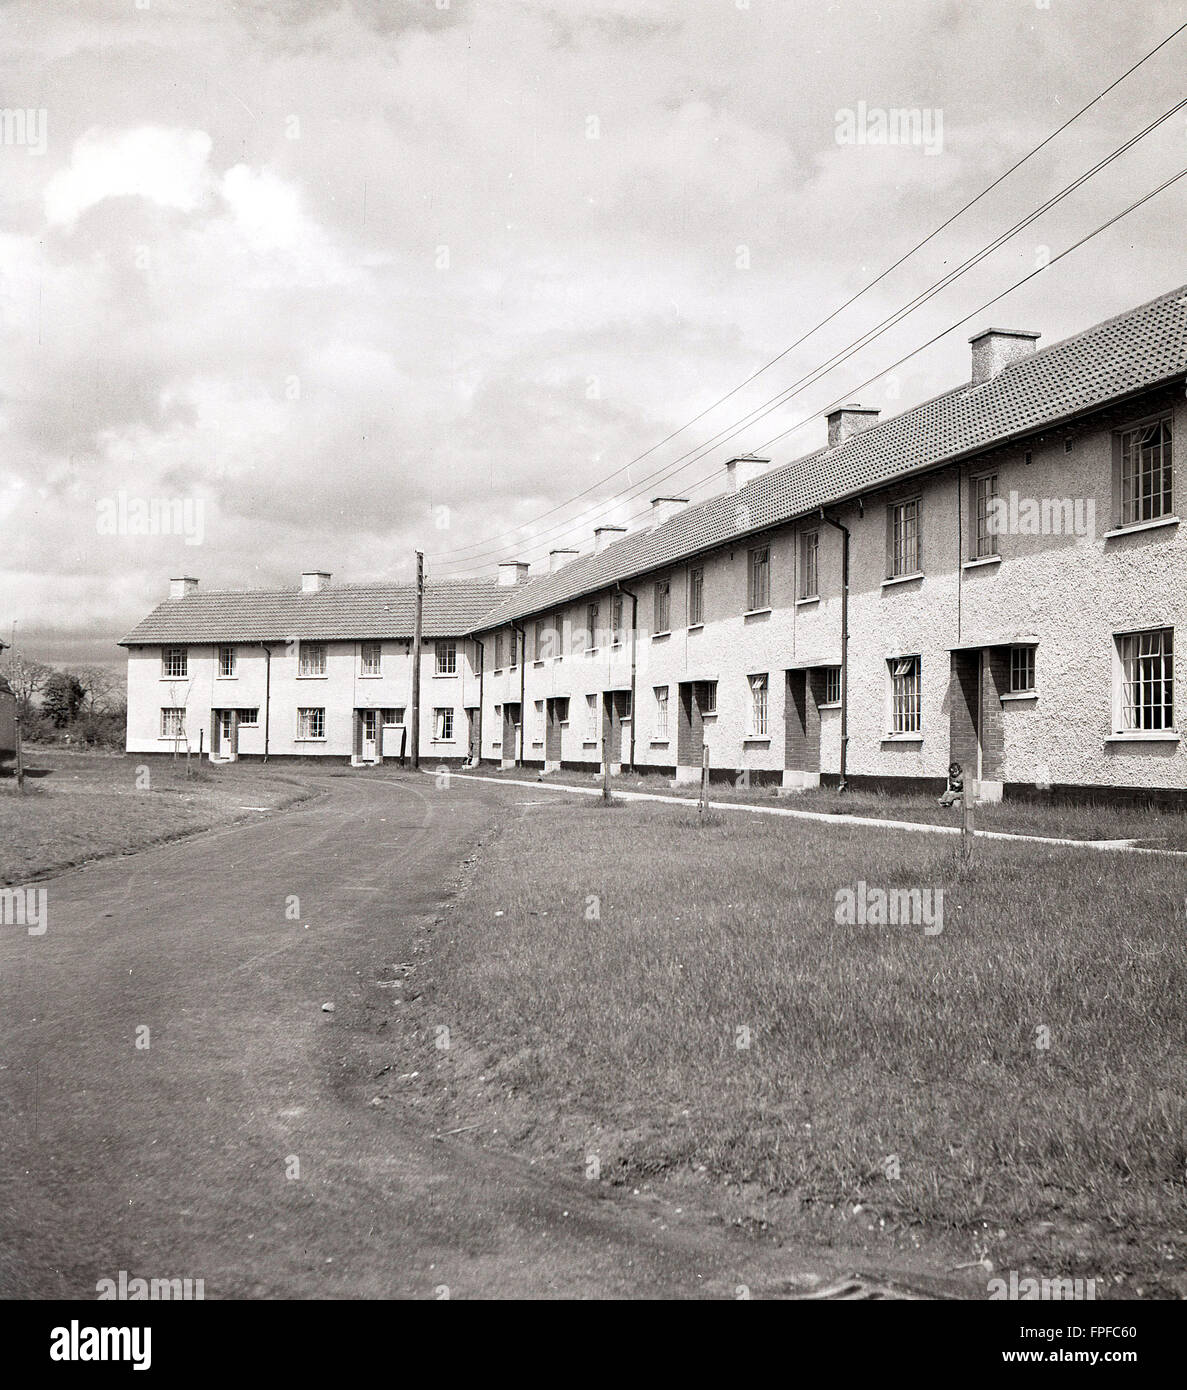 1950s historical, new housing estate at Clane, County Kildare, Ireland. Stock Photo